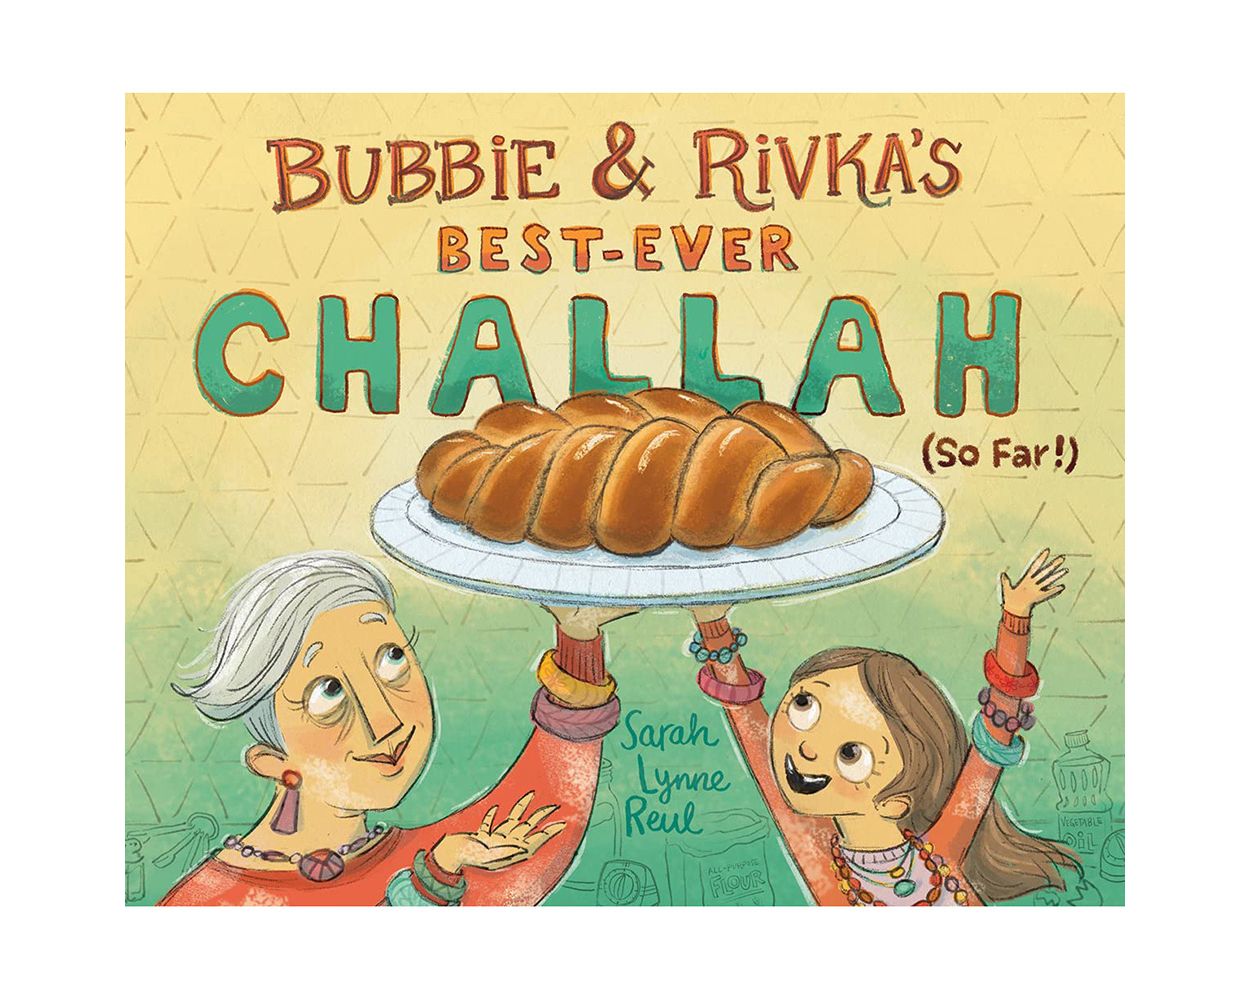 Bubbie & Rivka's Best-Ever Challah (So Far!) by Sarah Lynne Reul